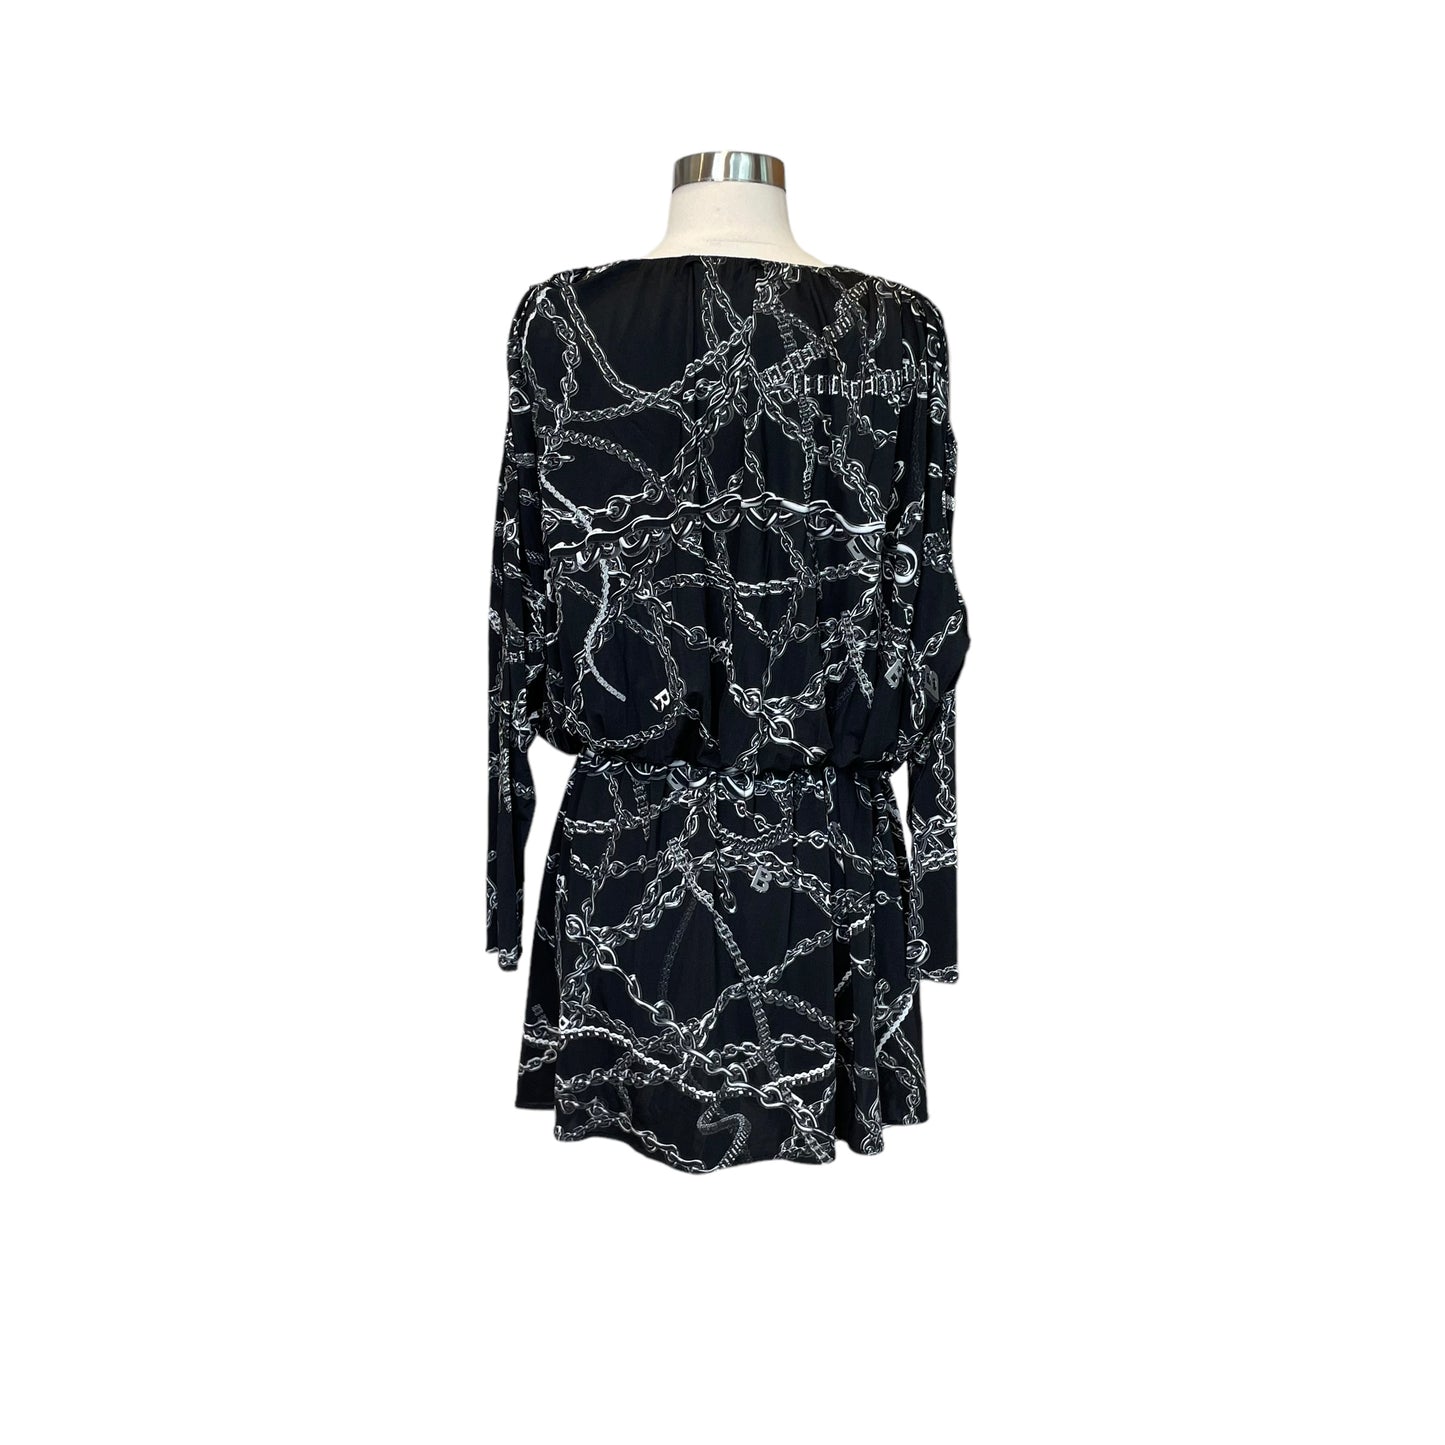 Black Chain Print Dress - M